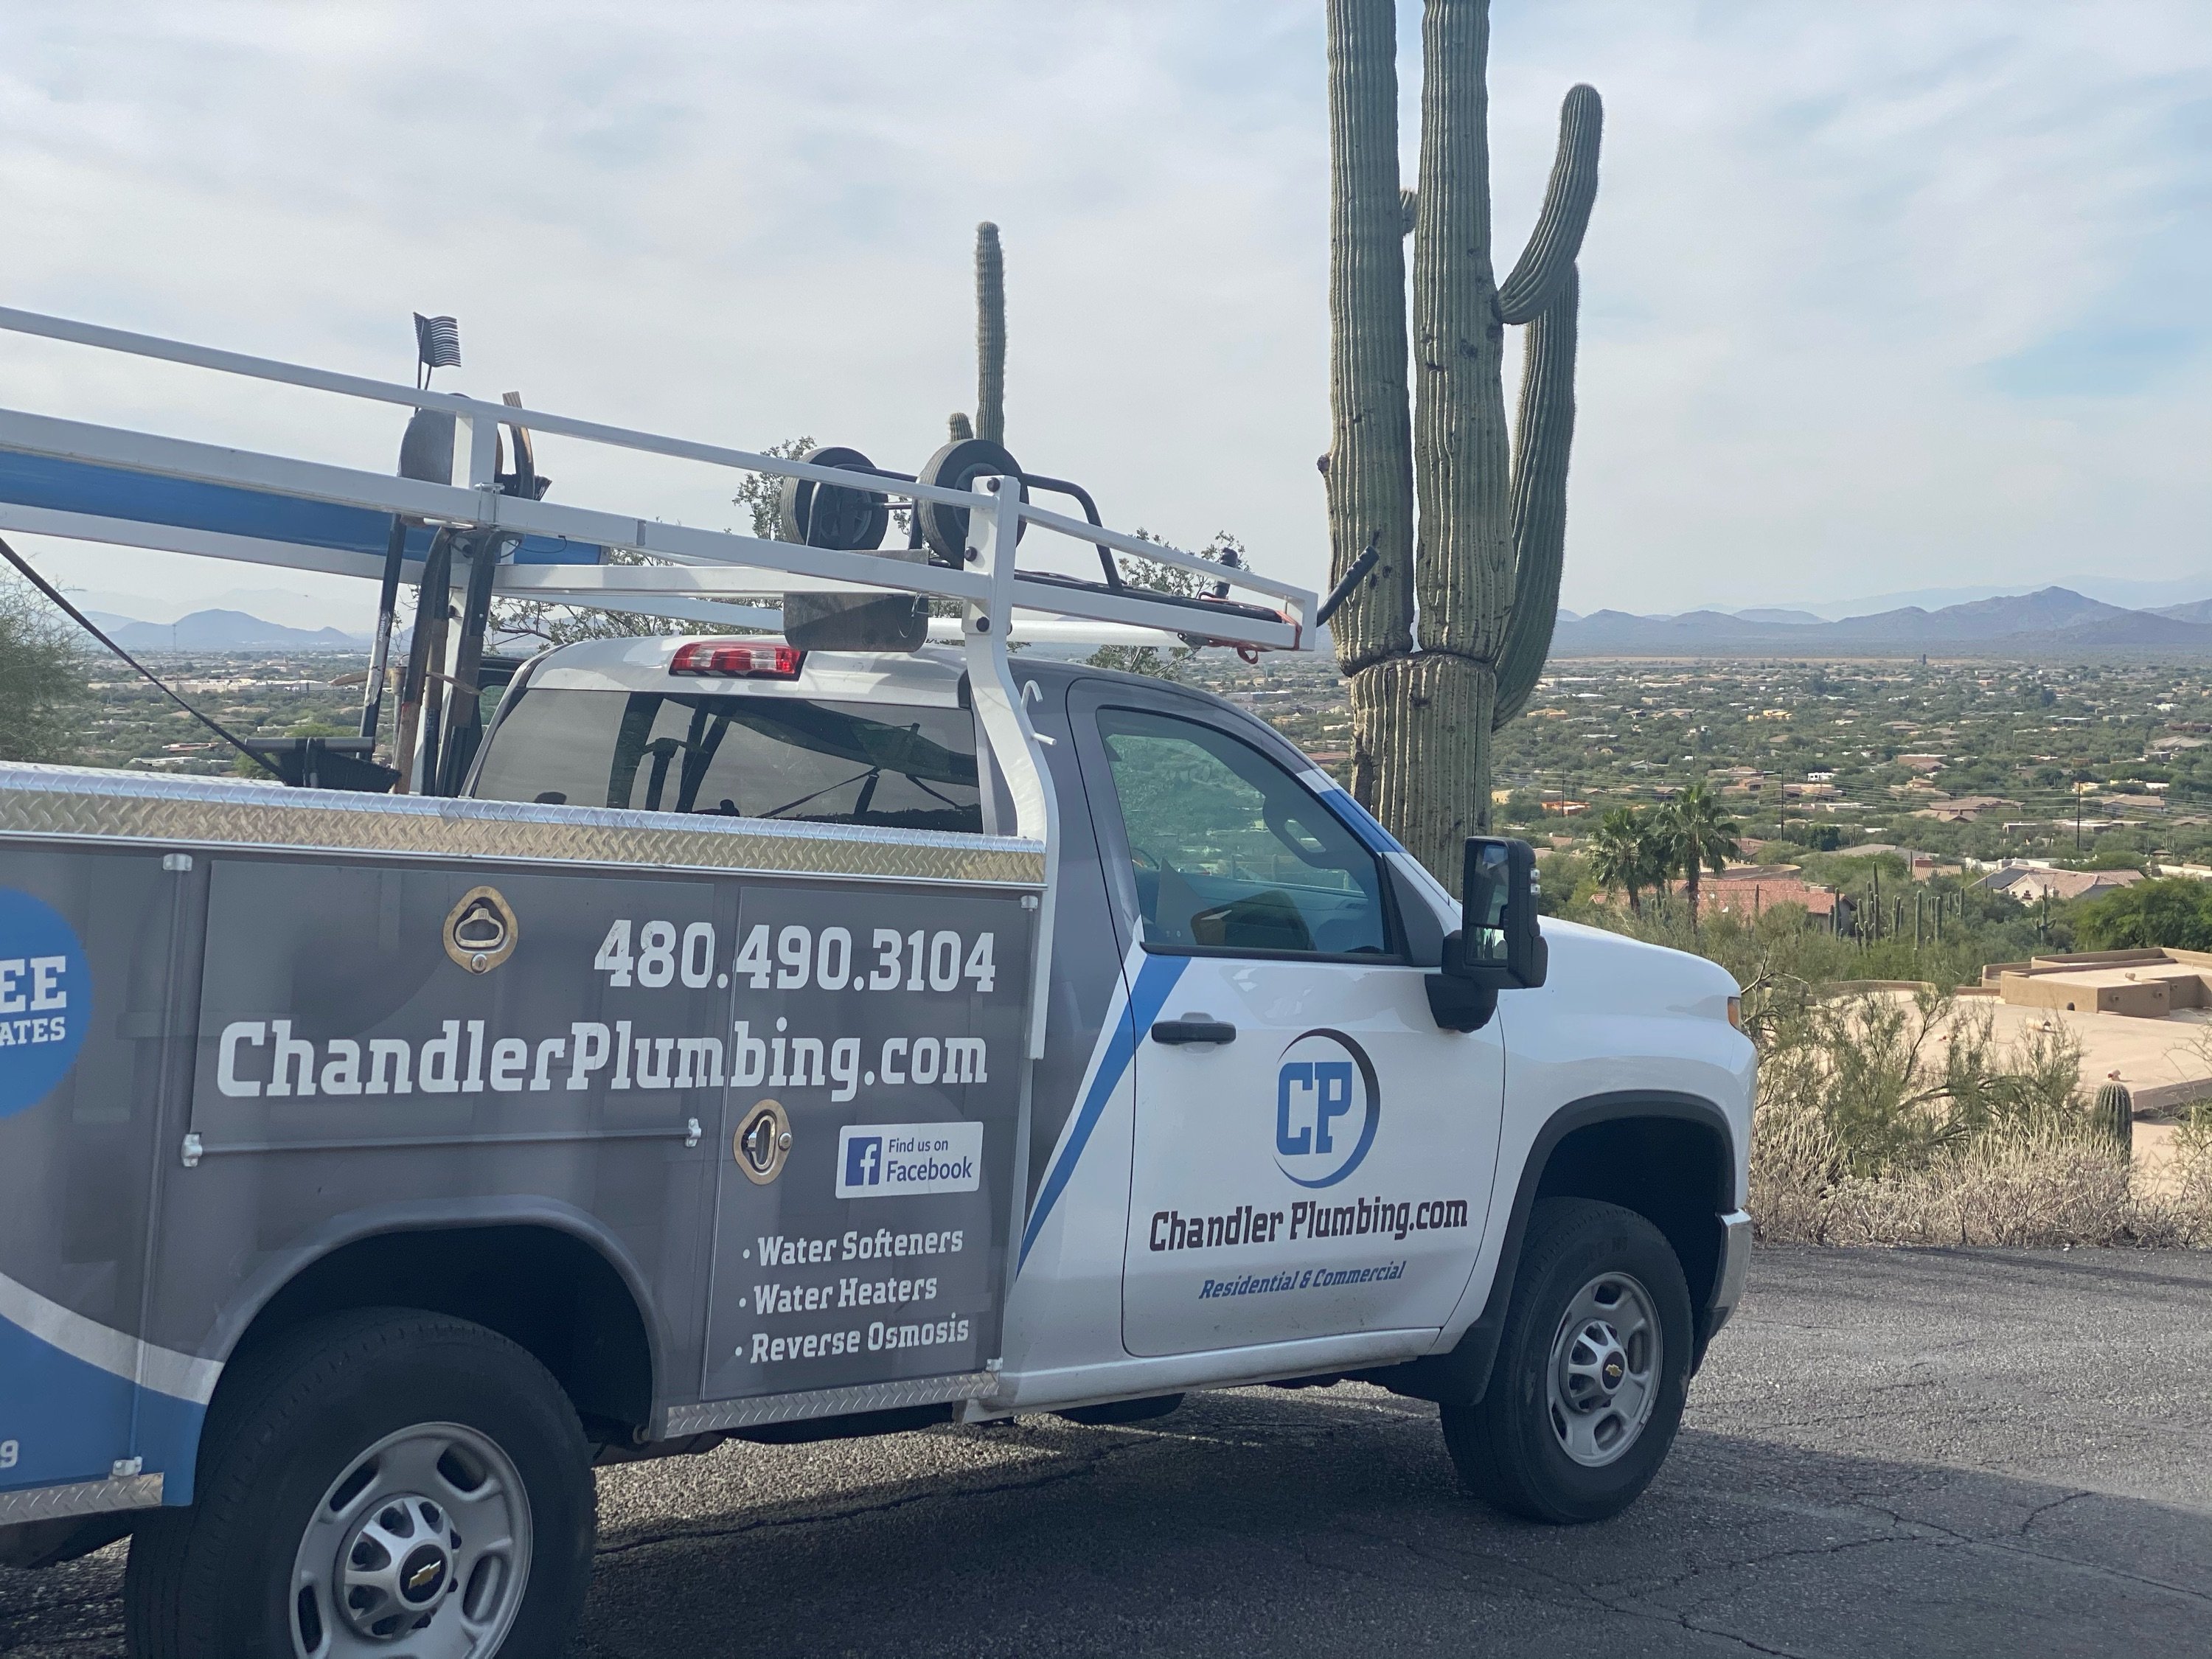 Chandler Plumbing.com, LLC Logo